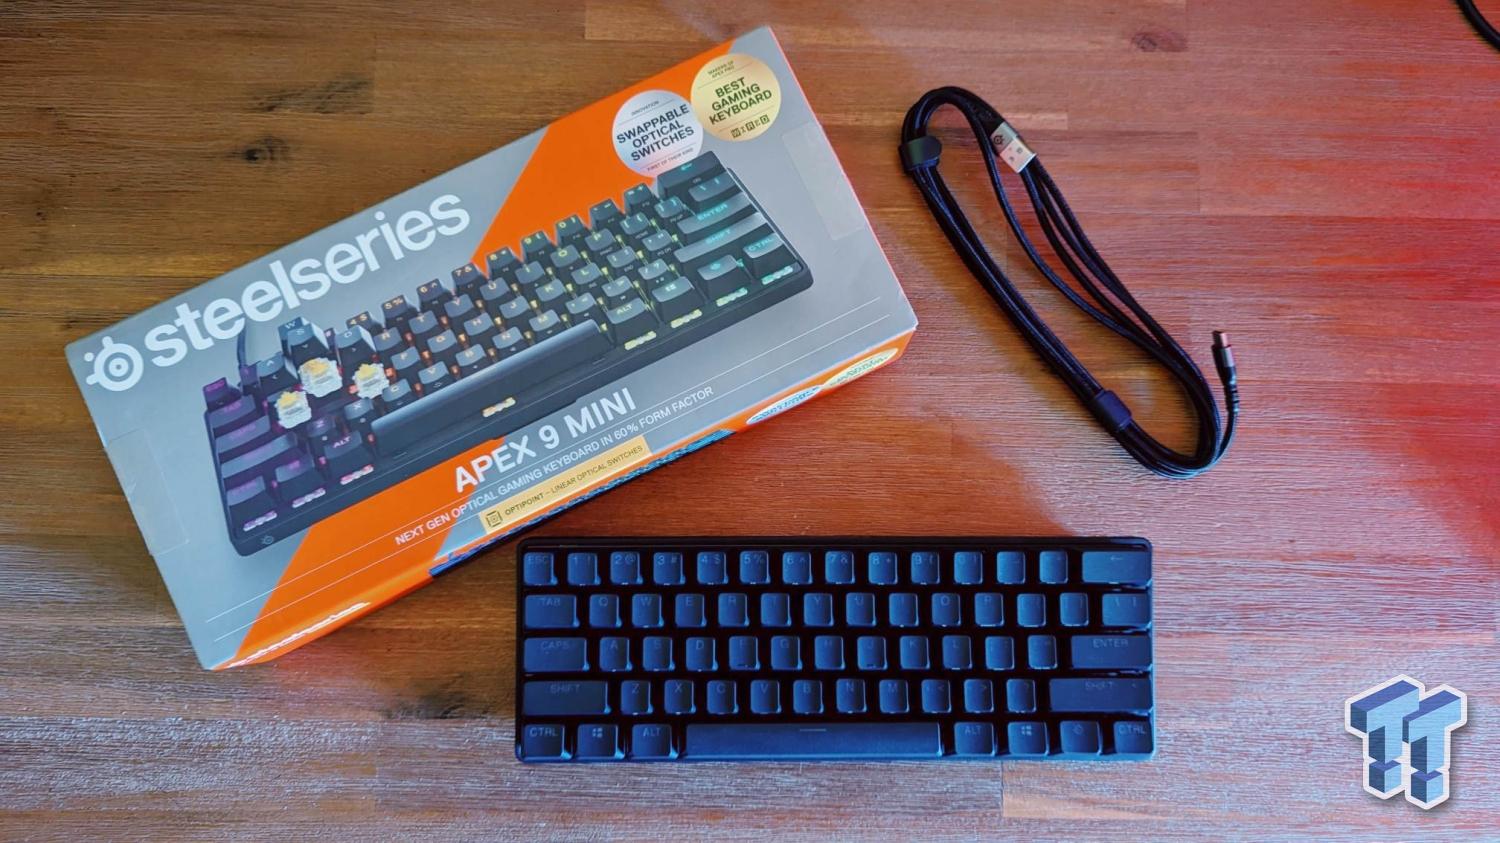 SteelSeries Apex 9 TKL / Mini - Mechanical Keyboard